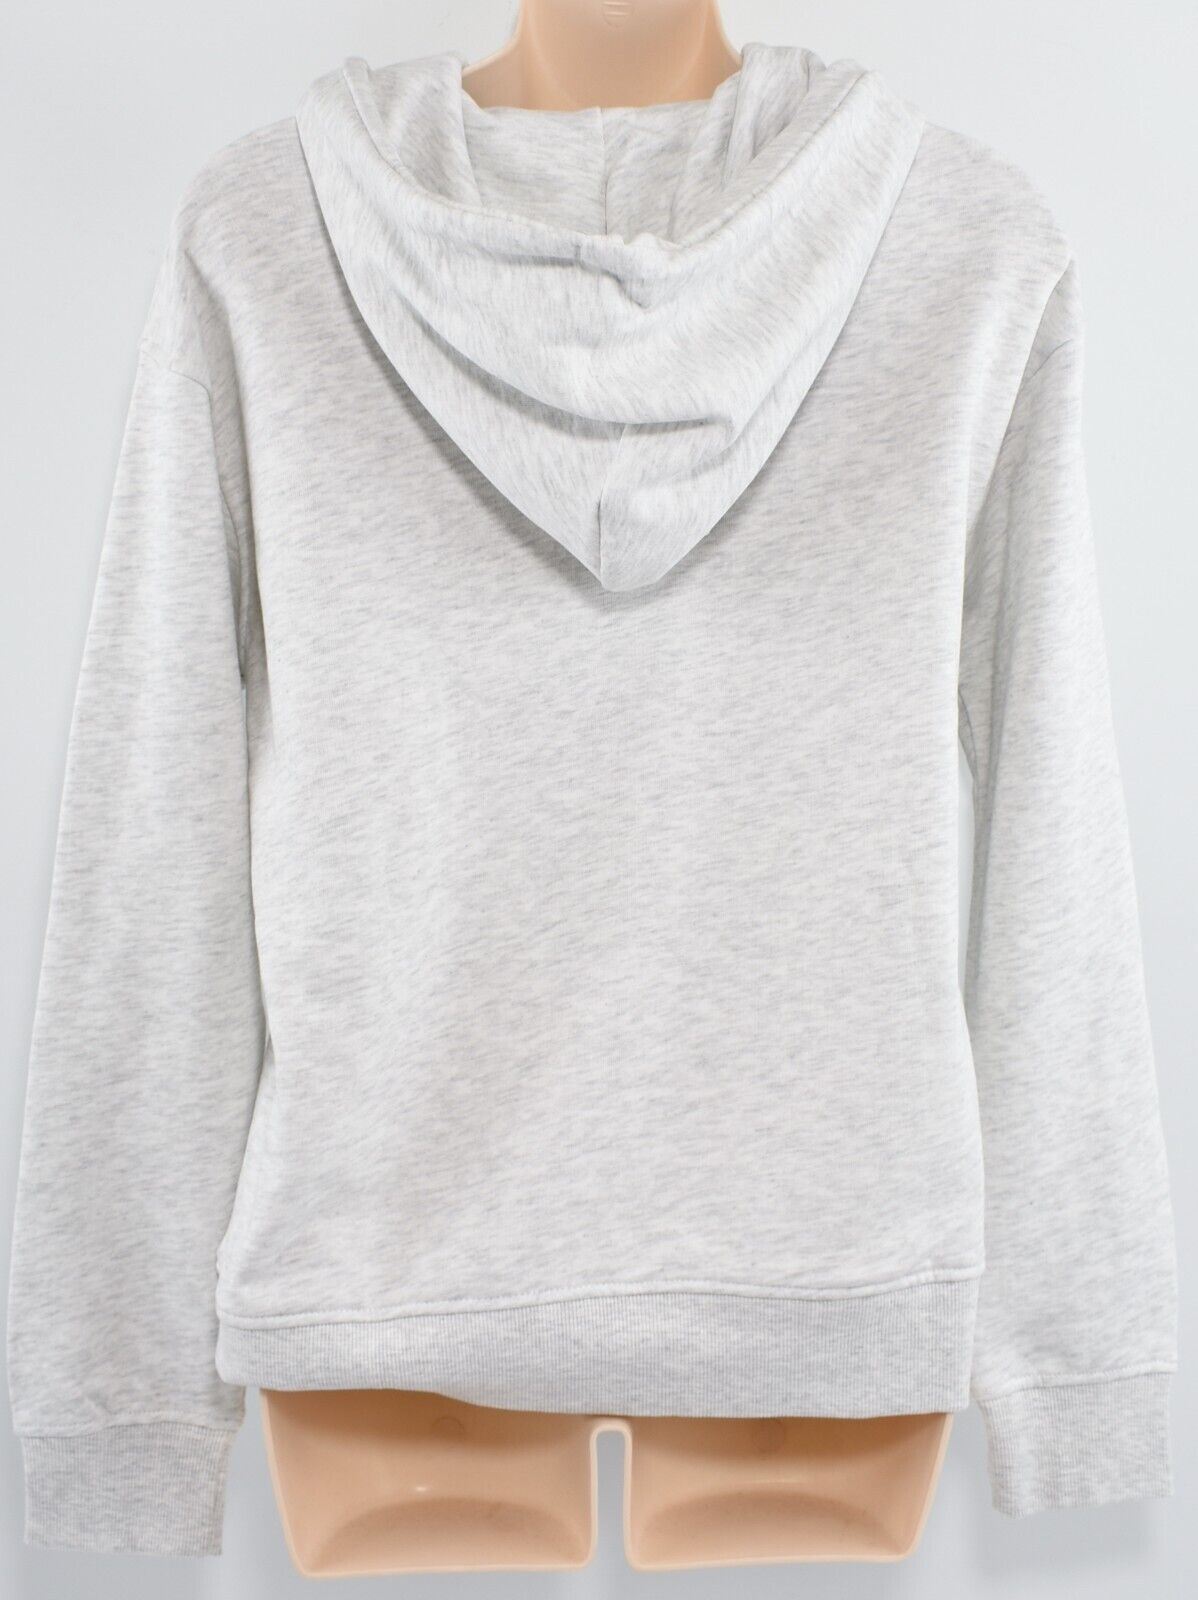 O'NEILL Women's CUBE Hoodie, Hooded Sweatshirt, White/Grey Melange, size S UK 10